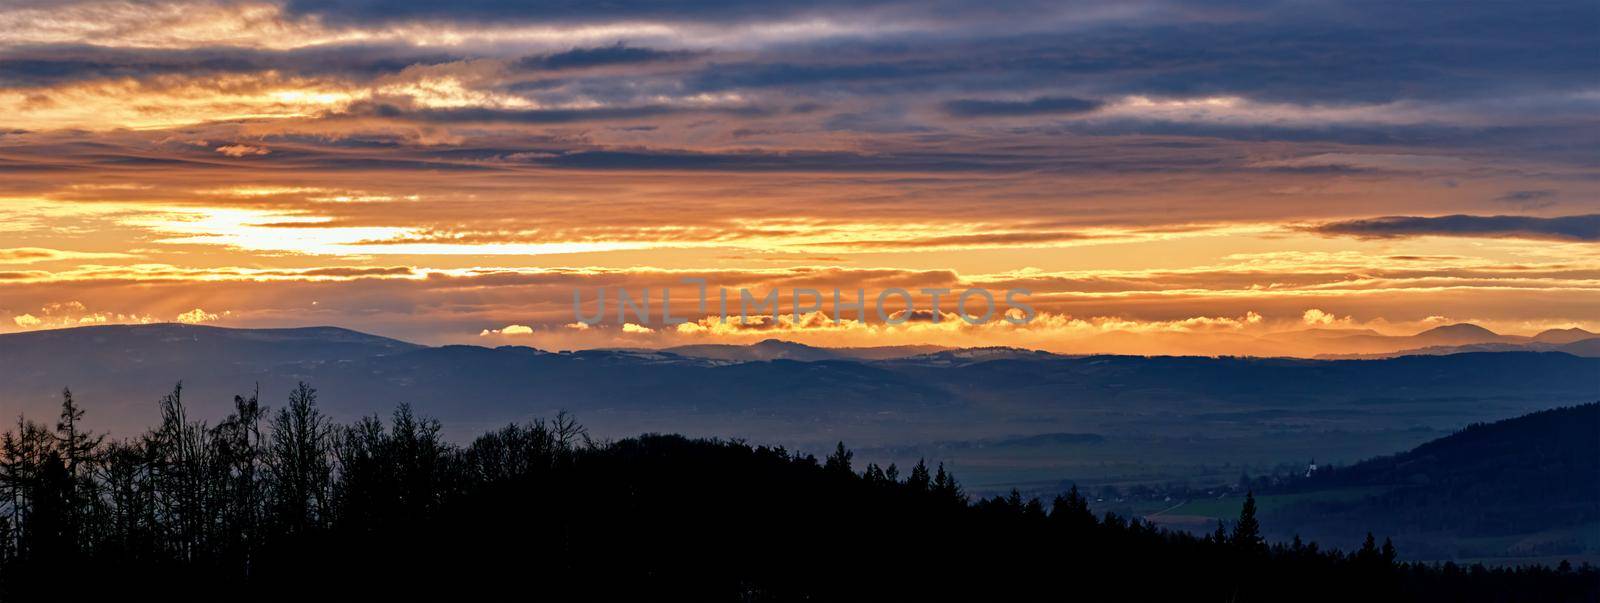 Sunset dramatic sky over mountains shape by Lazy_Bear